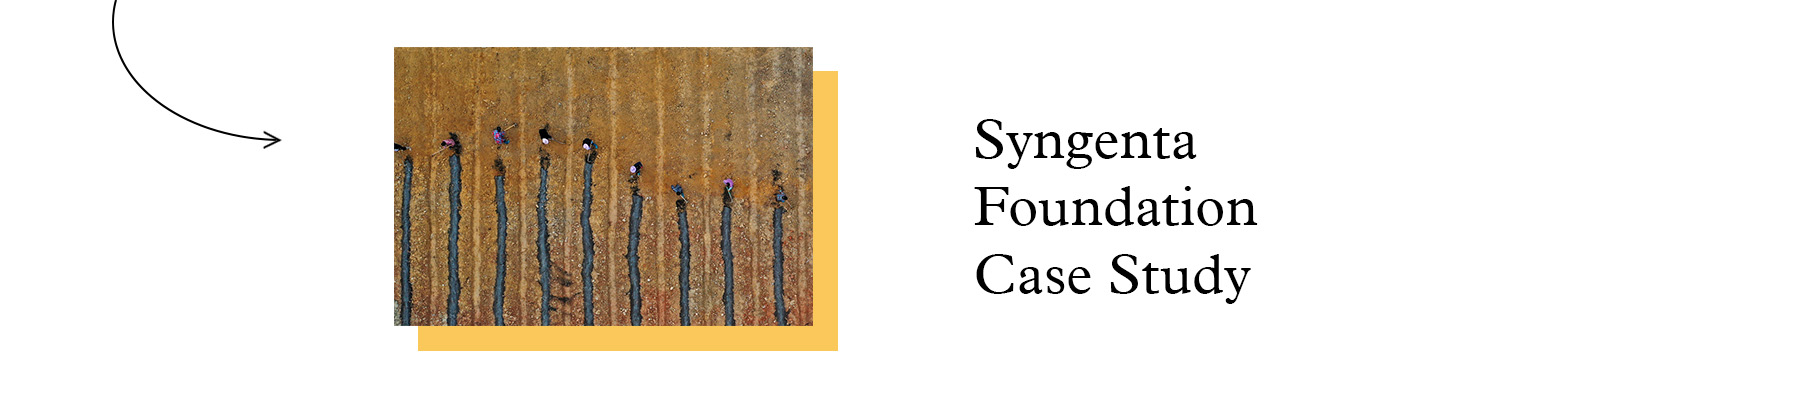 Strategic Alignment Case Study - Syngenta Foundation